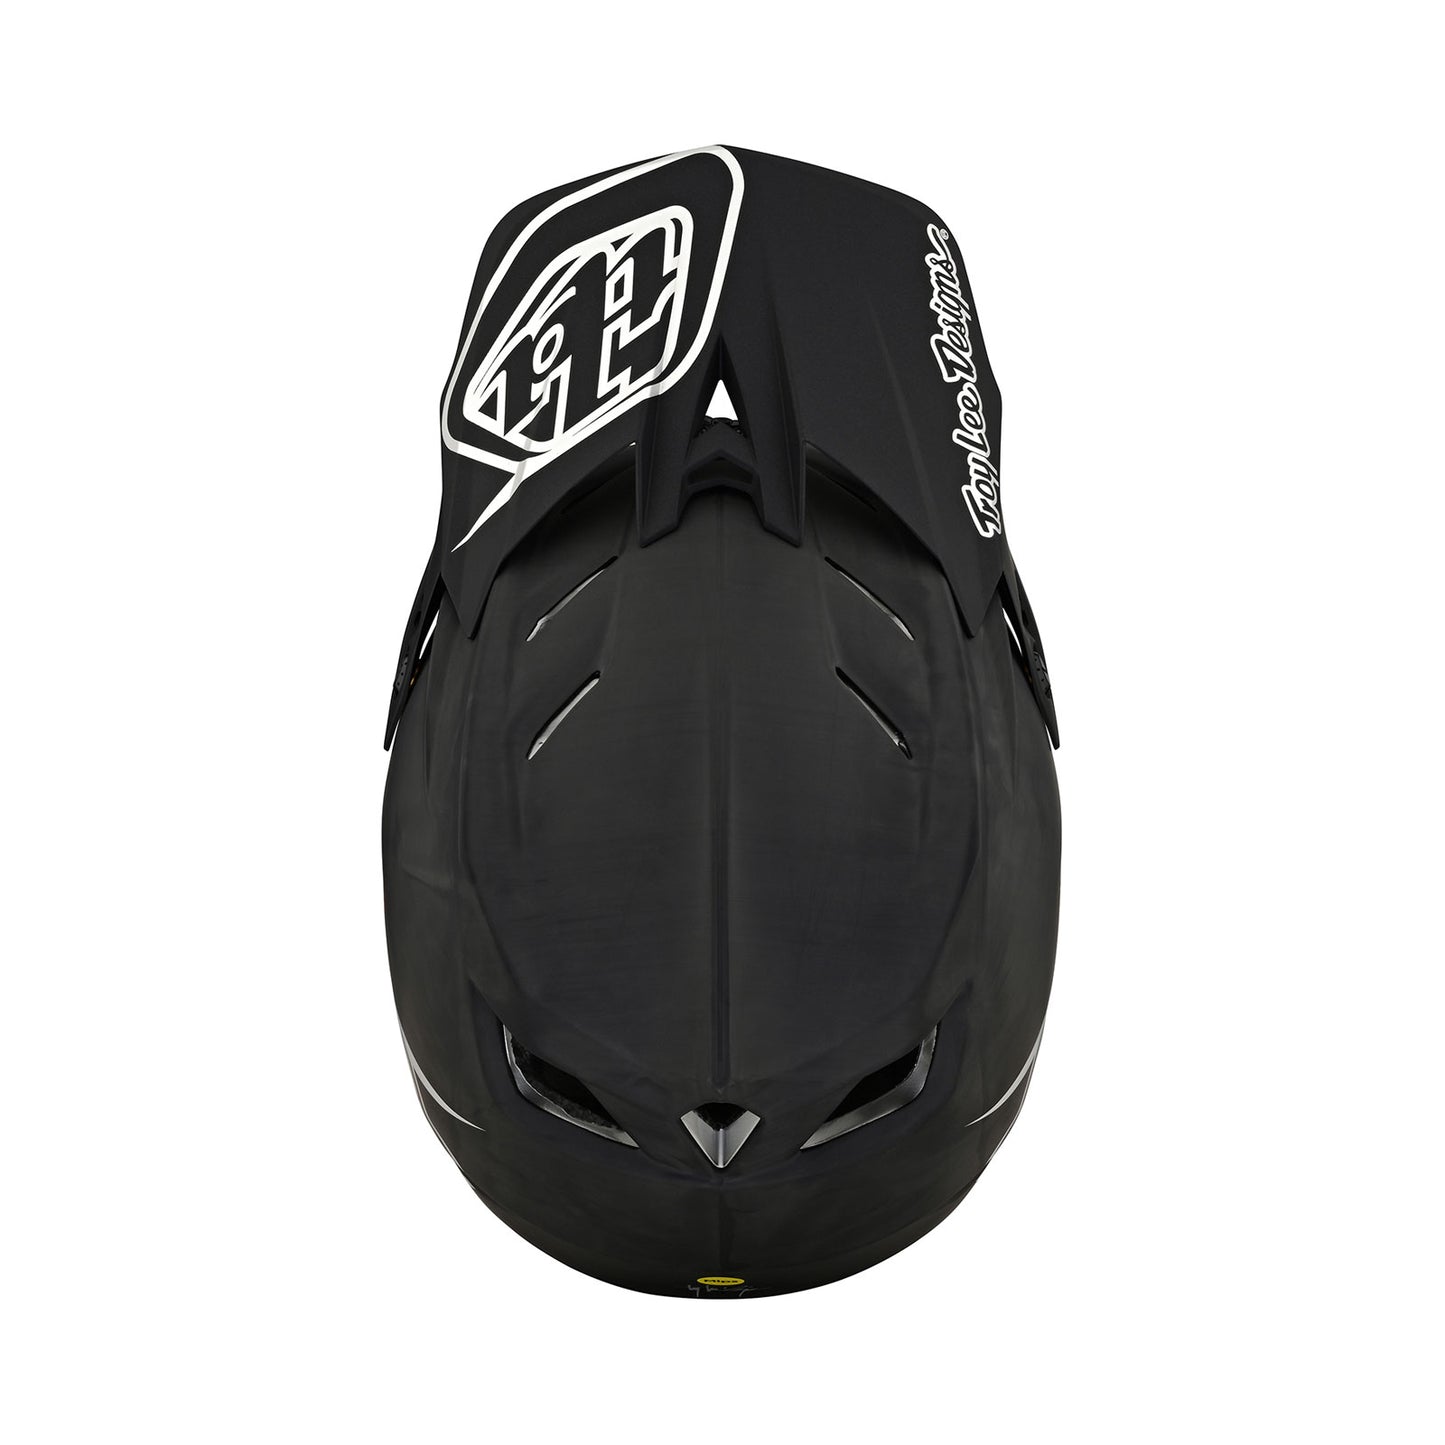 D4 Carbon Helmet W/MIPS Stealth Black / Silver